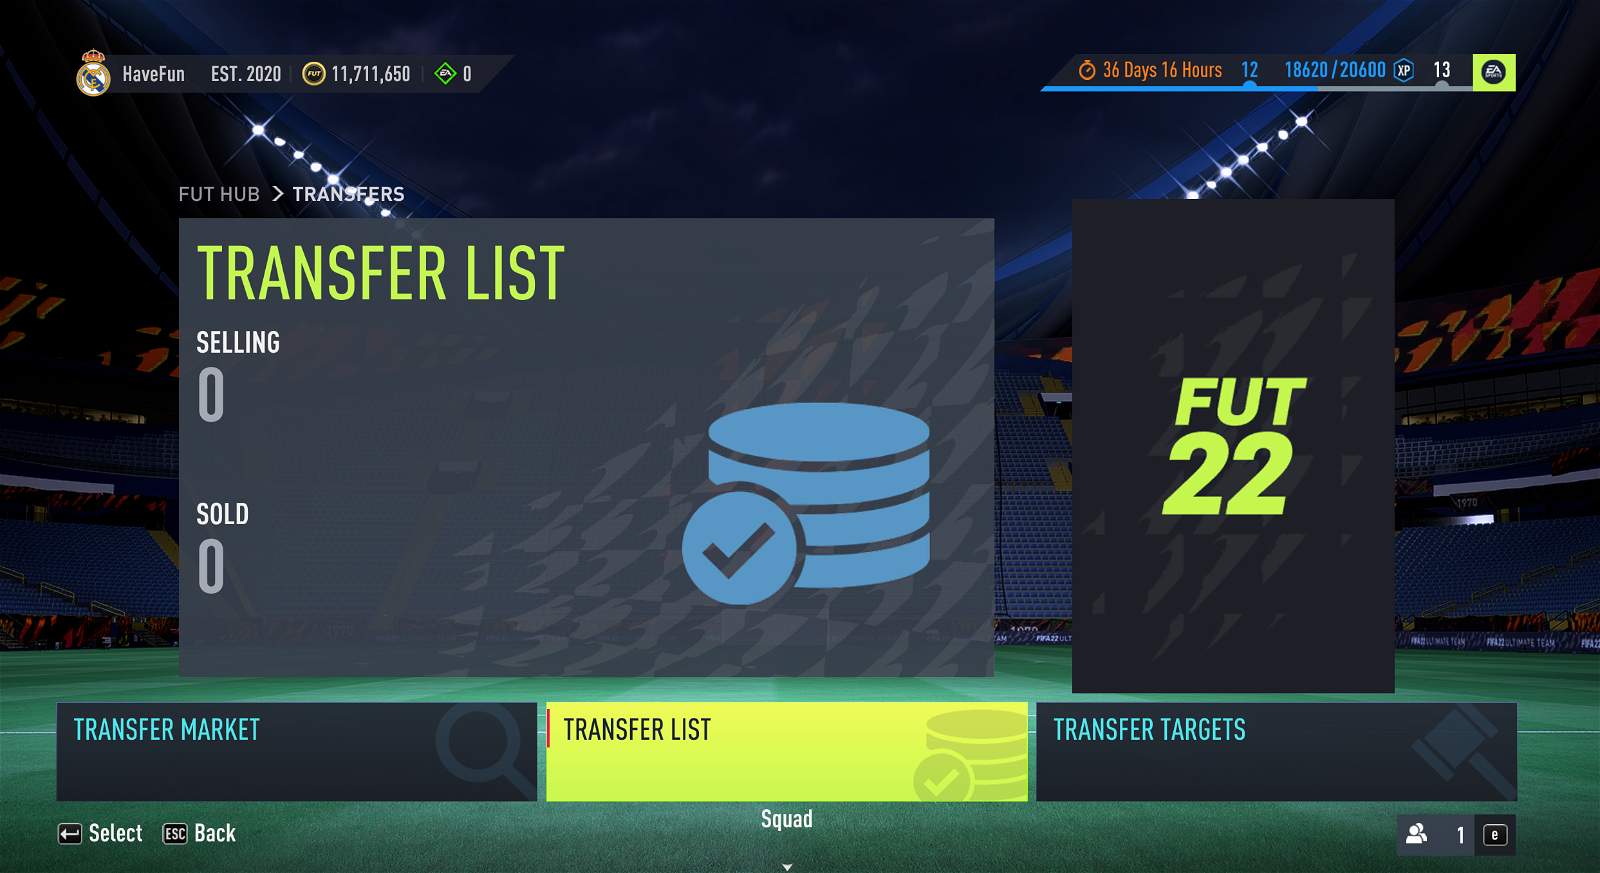 FIFA 22 fut account (PC) unlocked web app + 7 million coins - EpicNPC